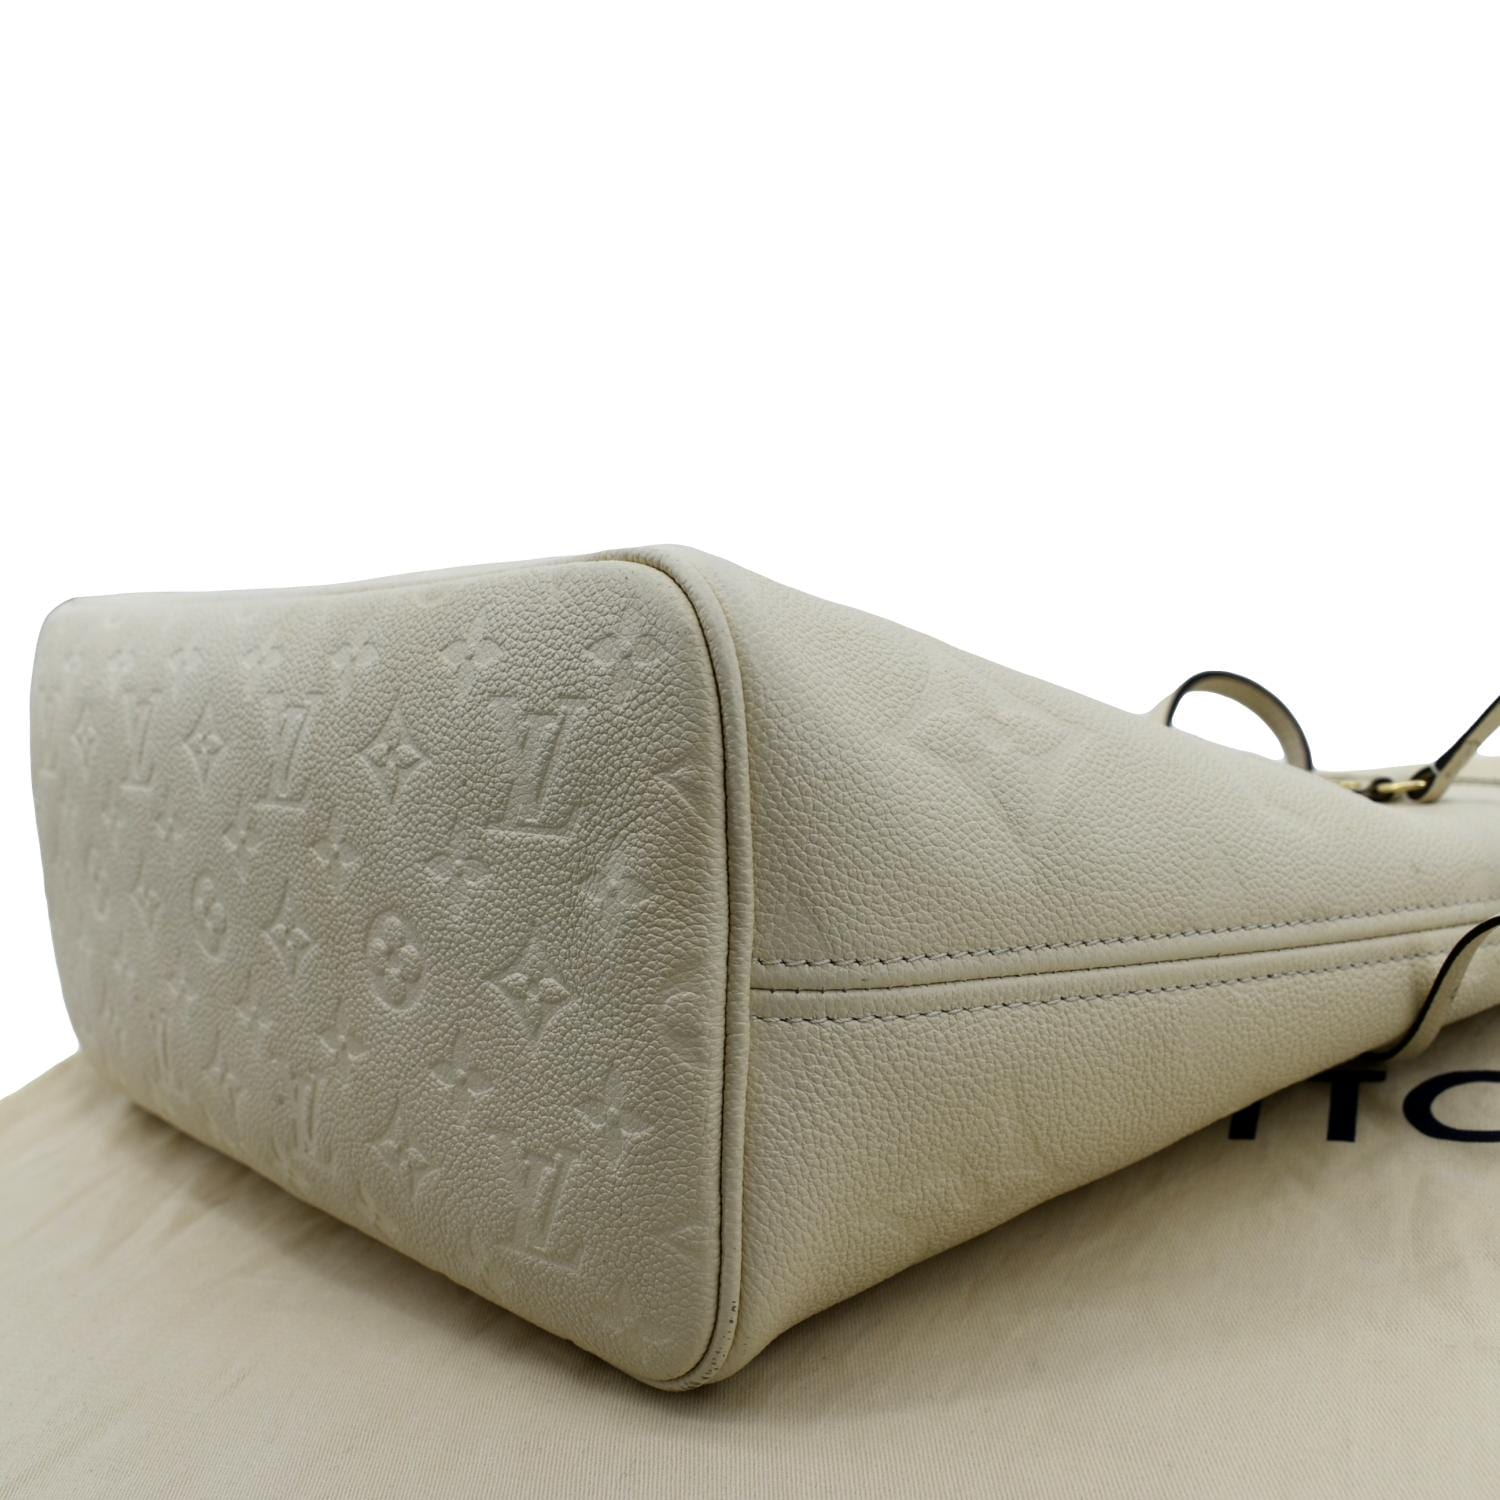 Louis Vuitton Neverfull MM Monogram Empreinte Tote Bag